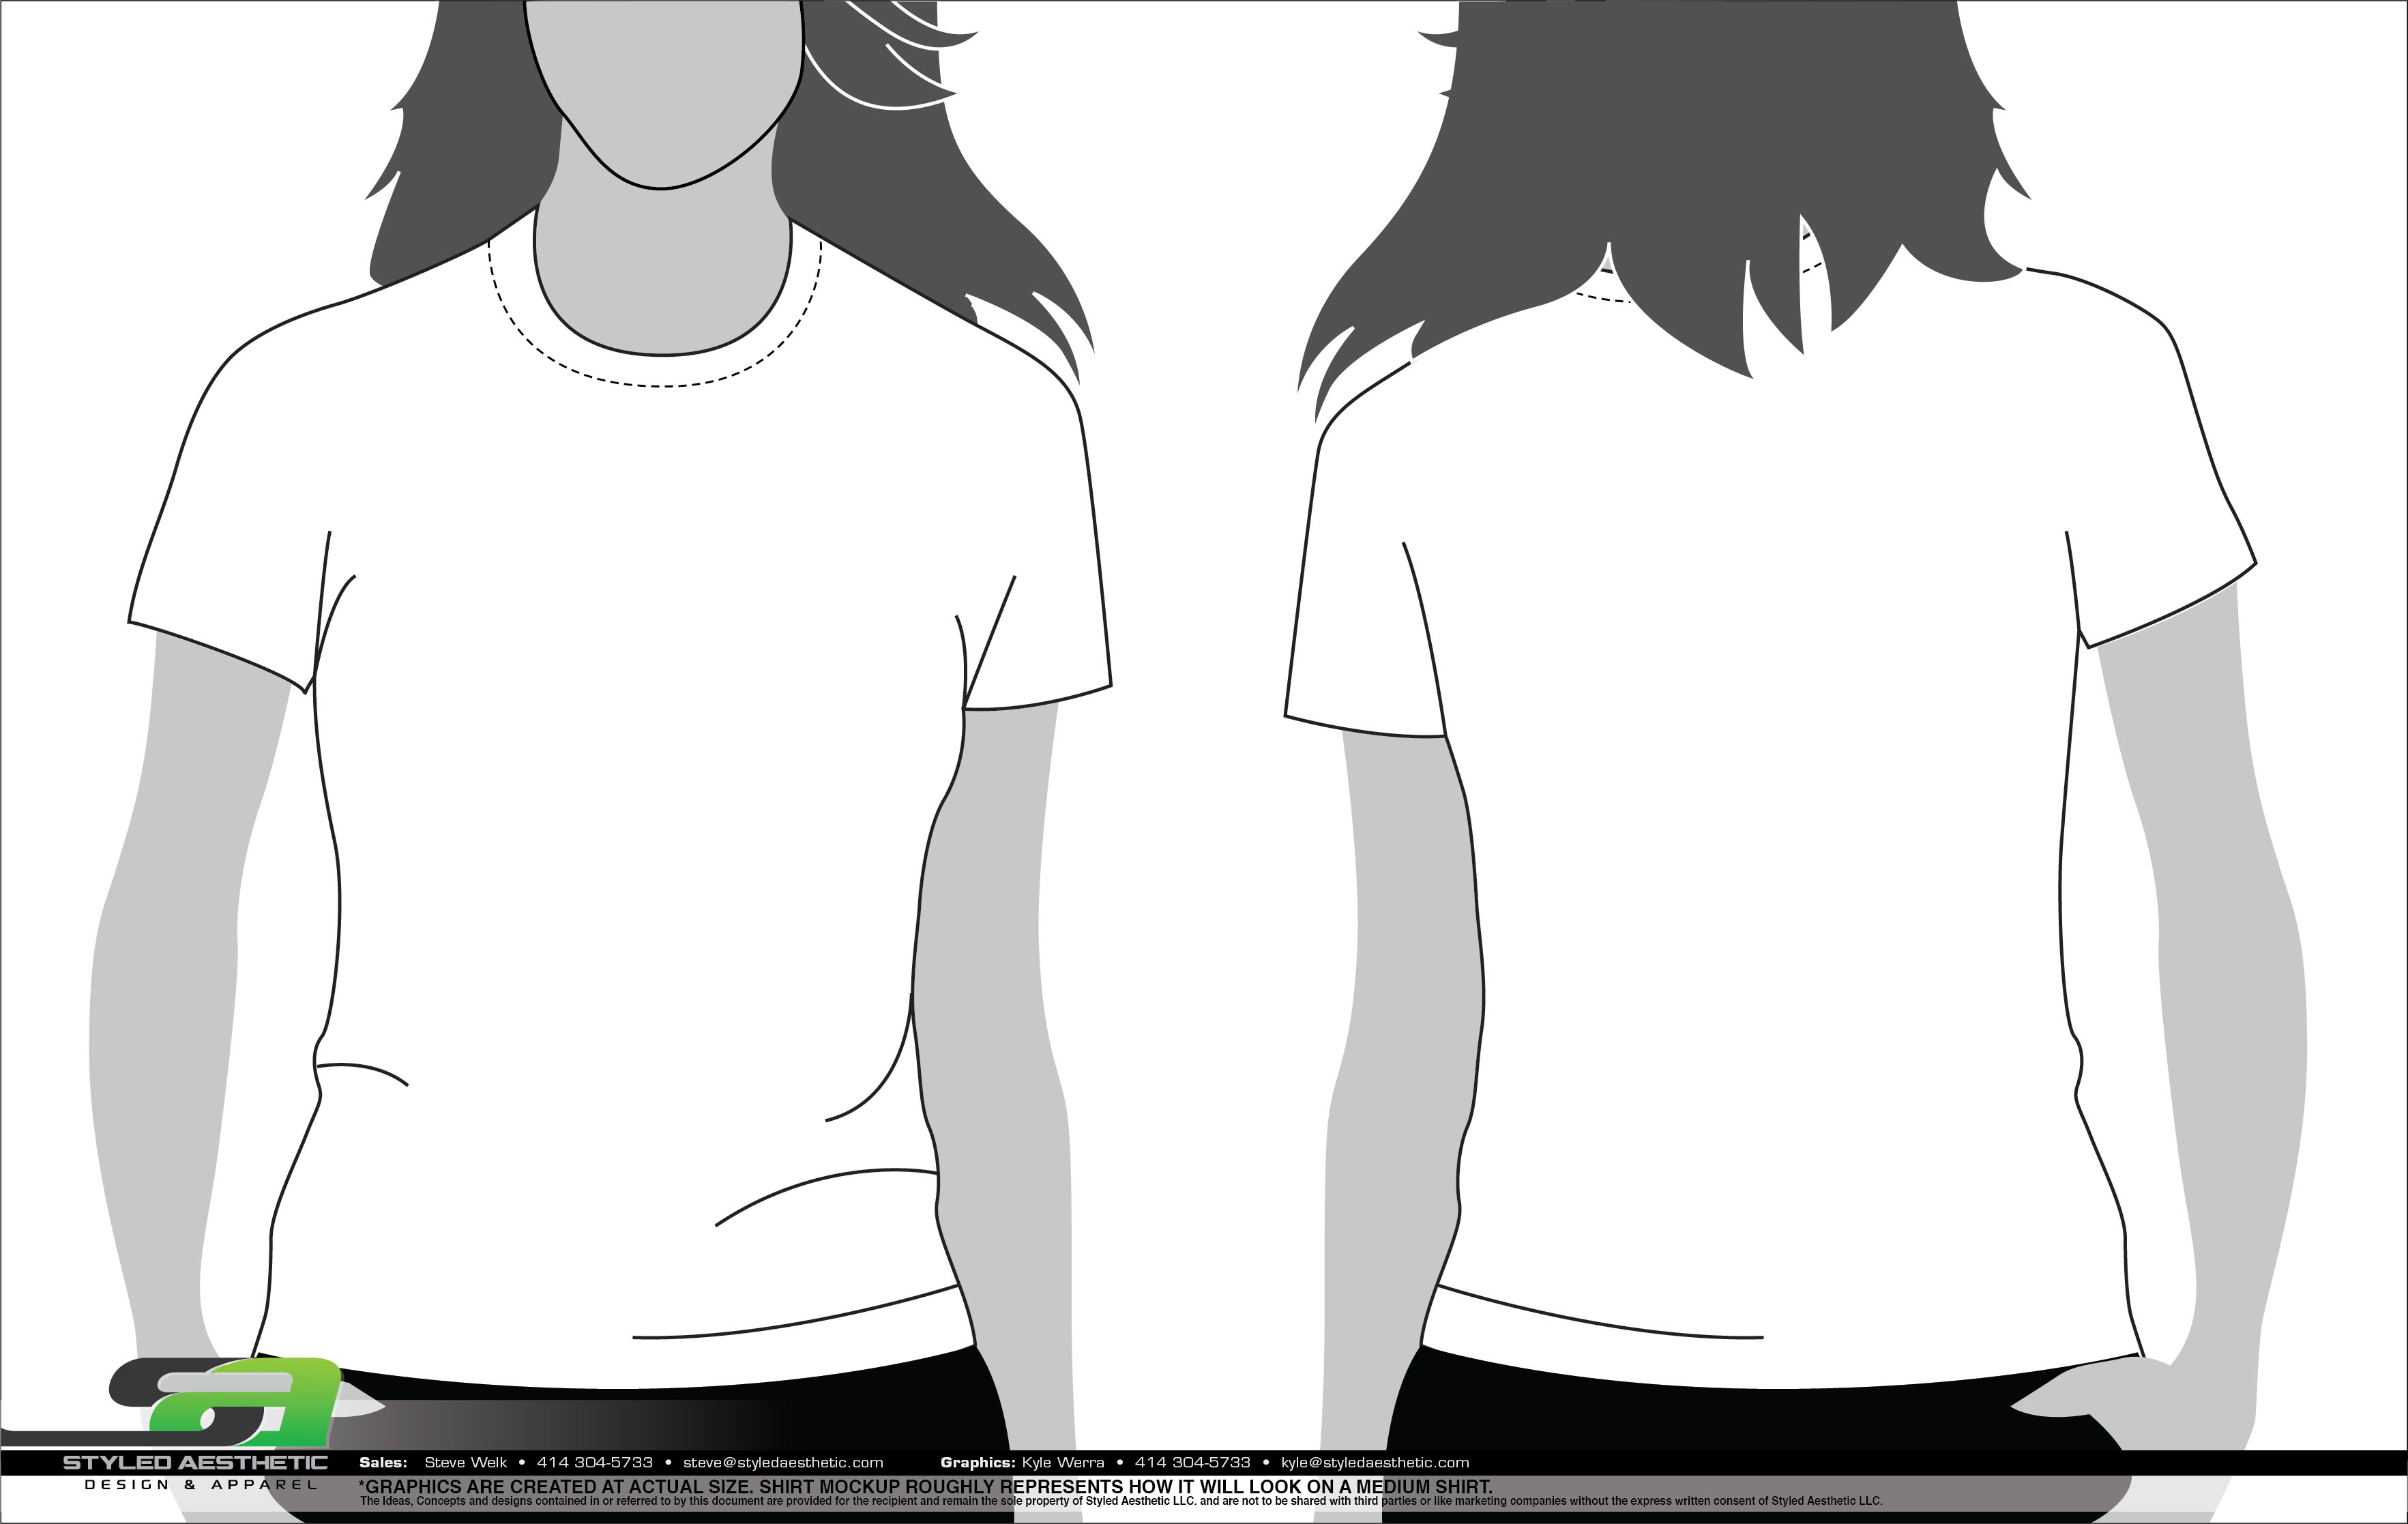 Female Blank T Shirt Template